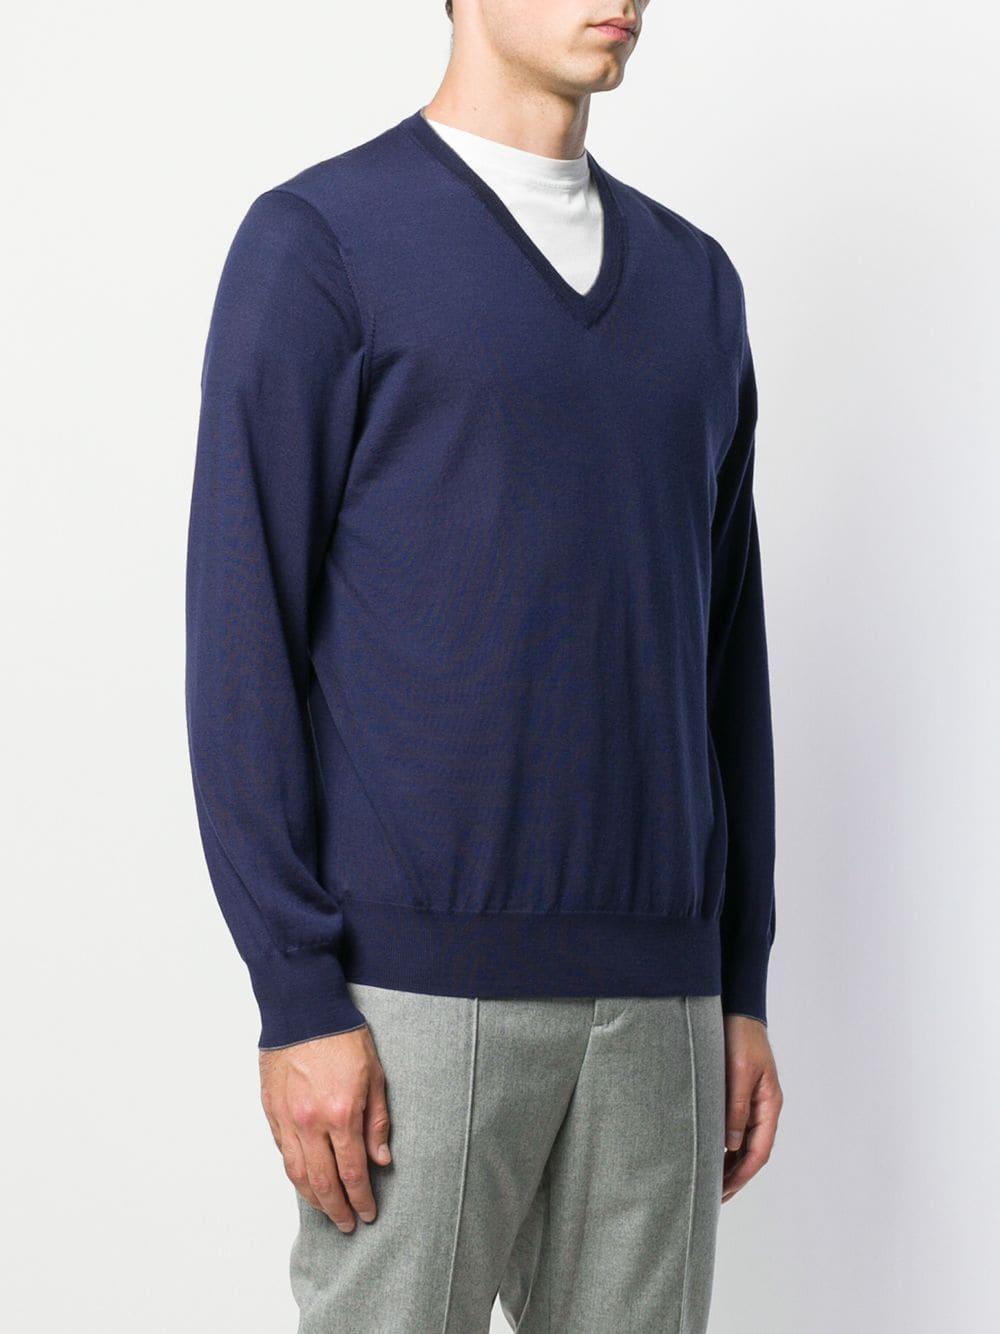 Brunello Cucinelli Wool V-neck Sweater in Blue for Men - Lyst